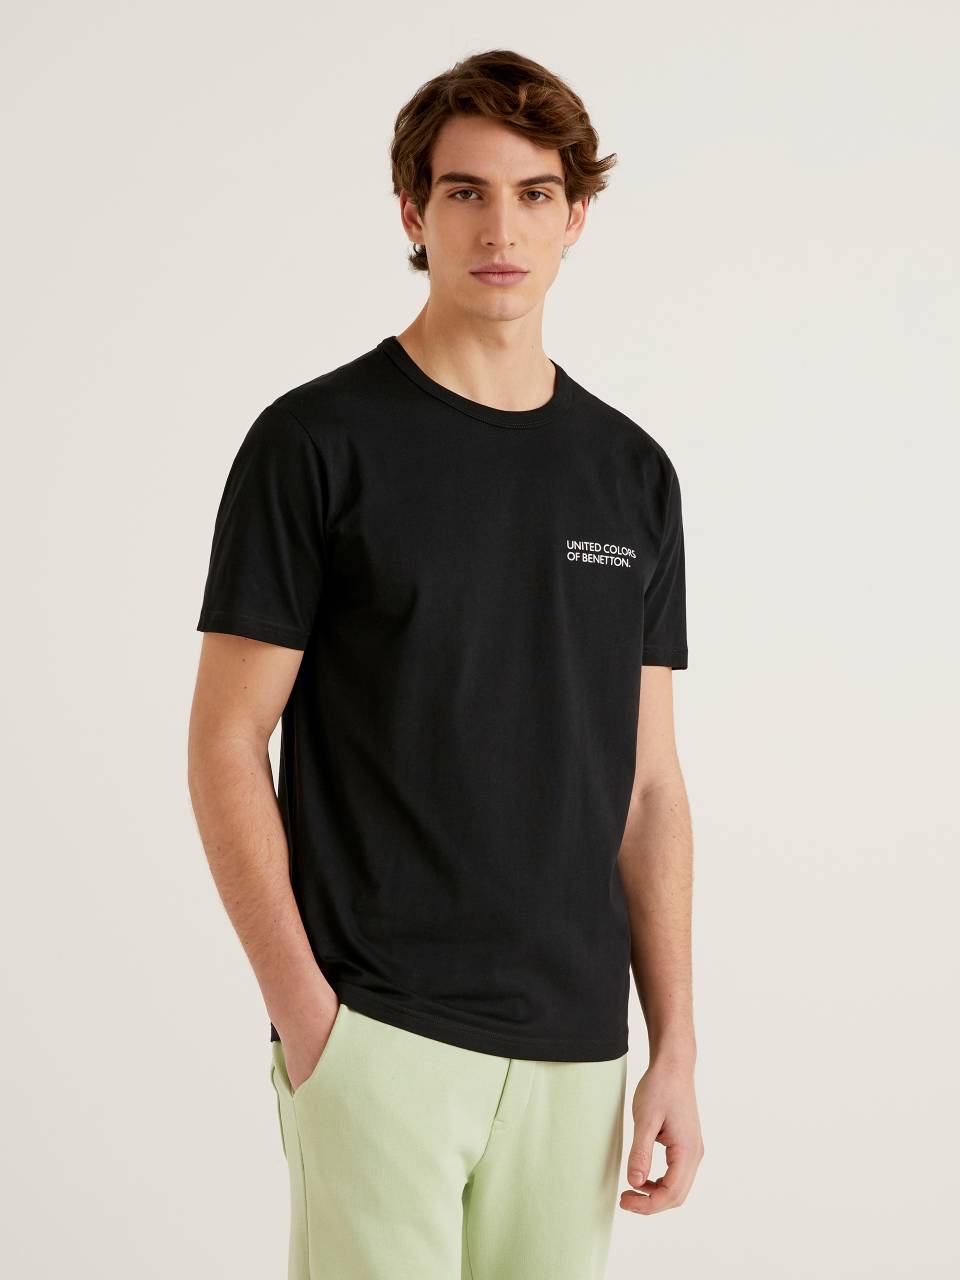 Benetton Black t-shirt with logo print. 1